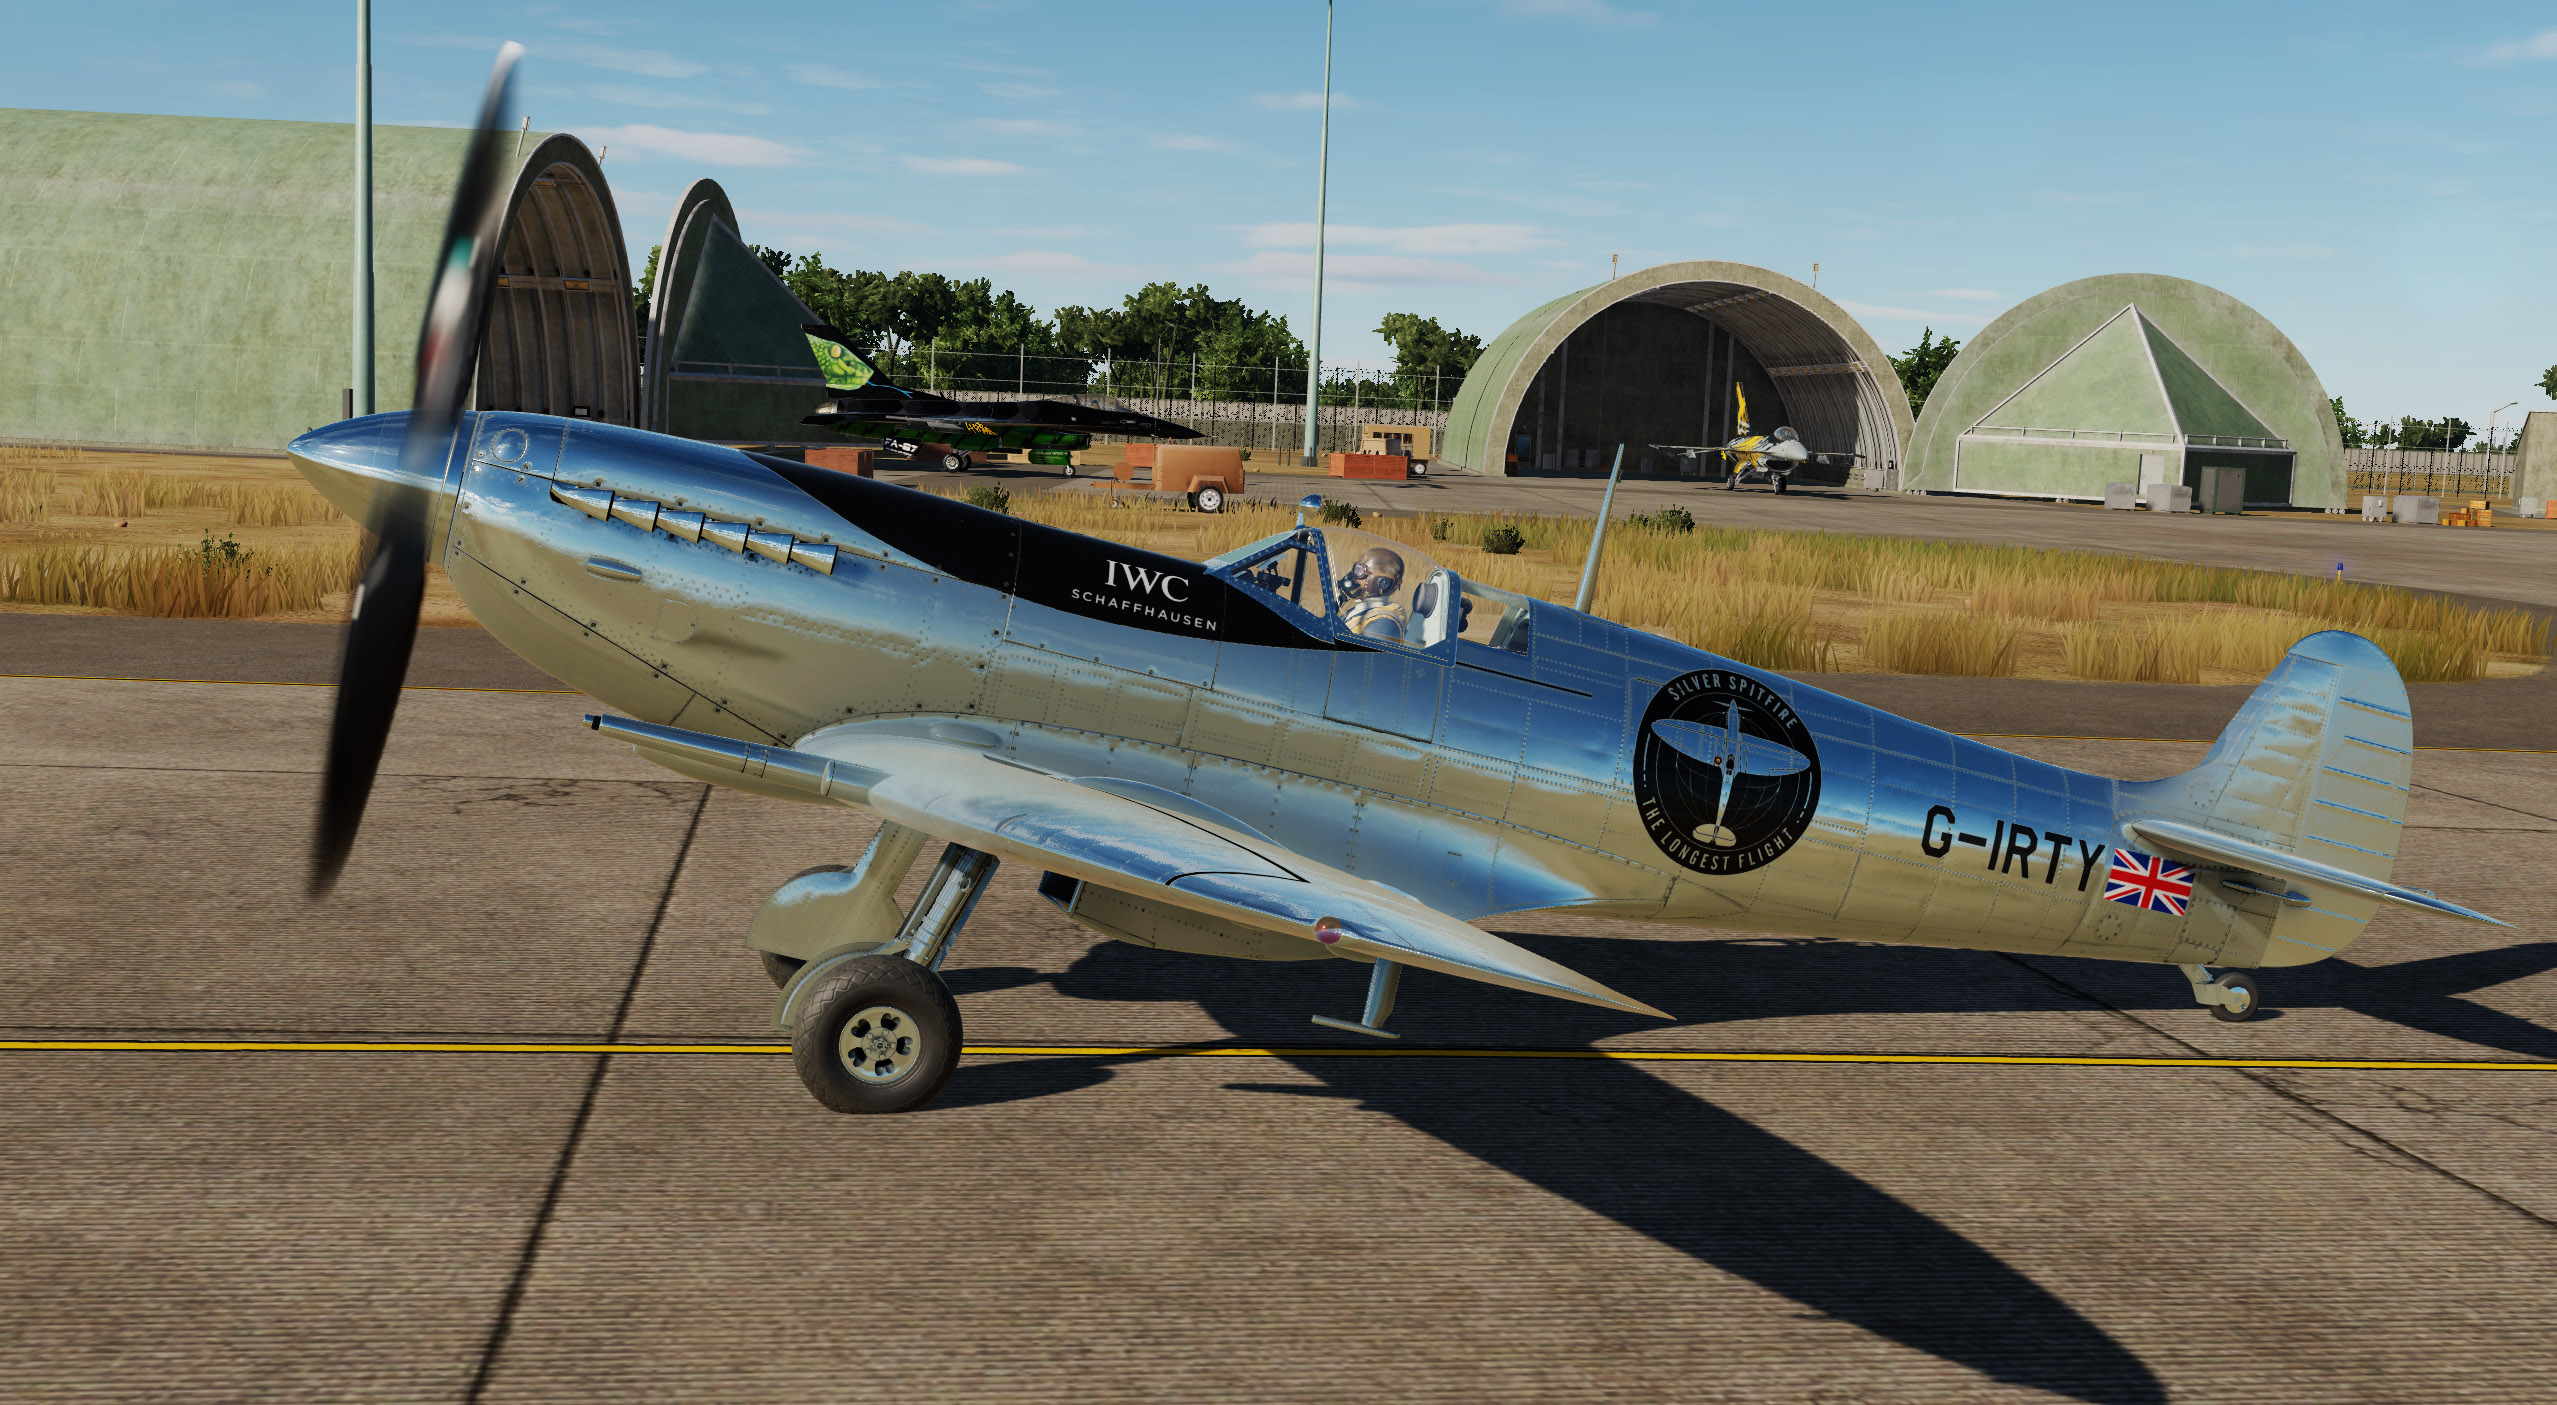 Silver Spitfire G-IRTY